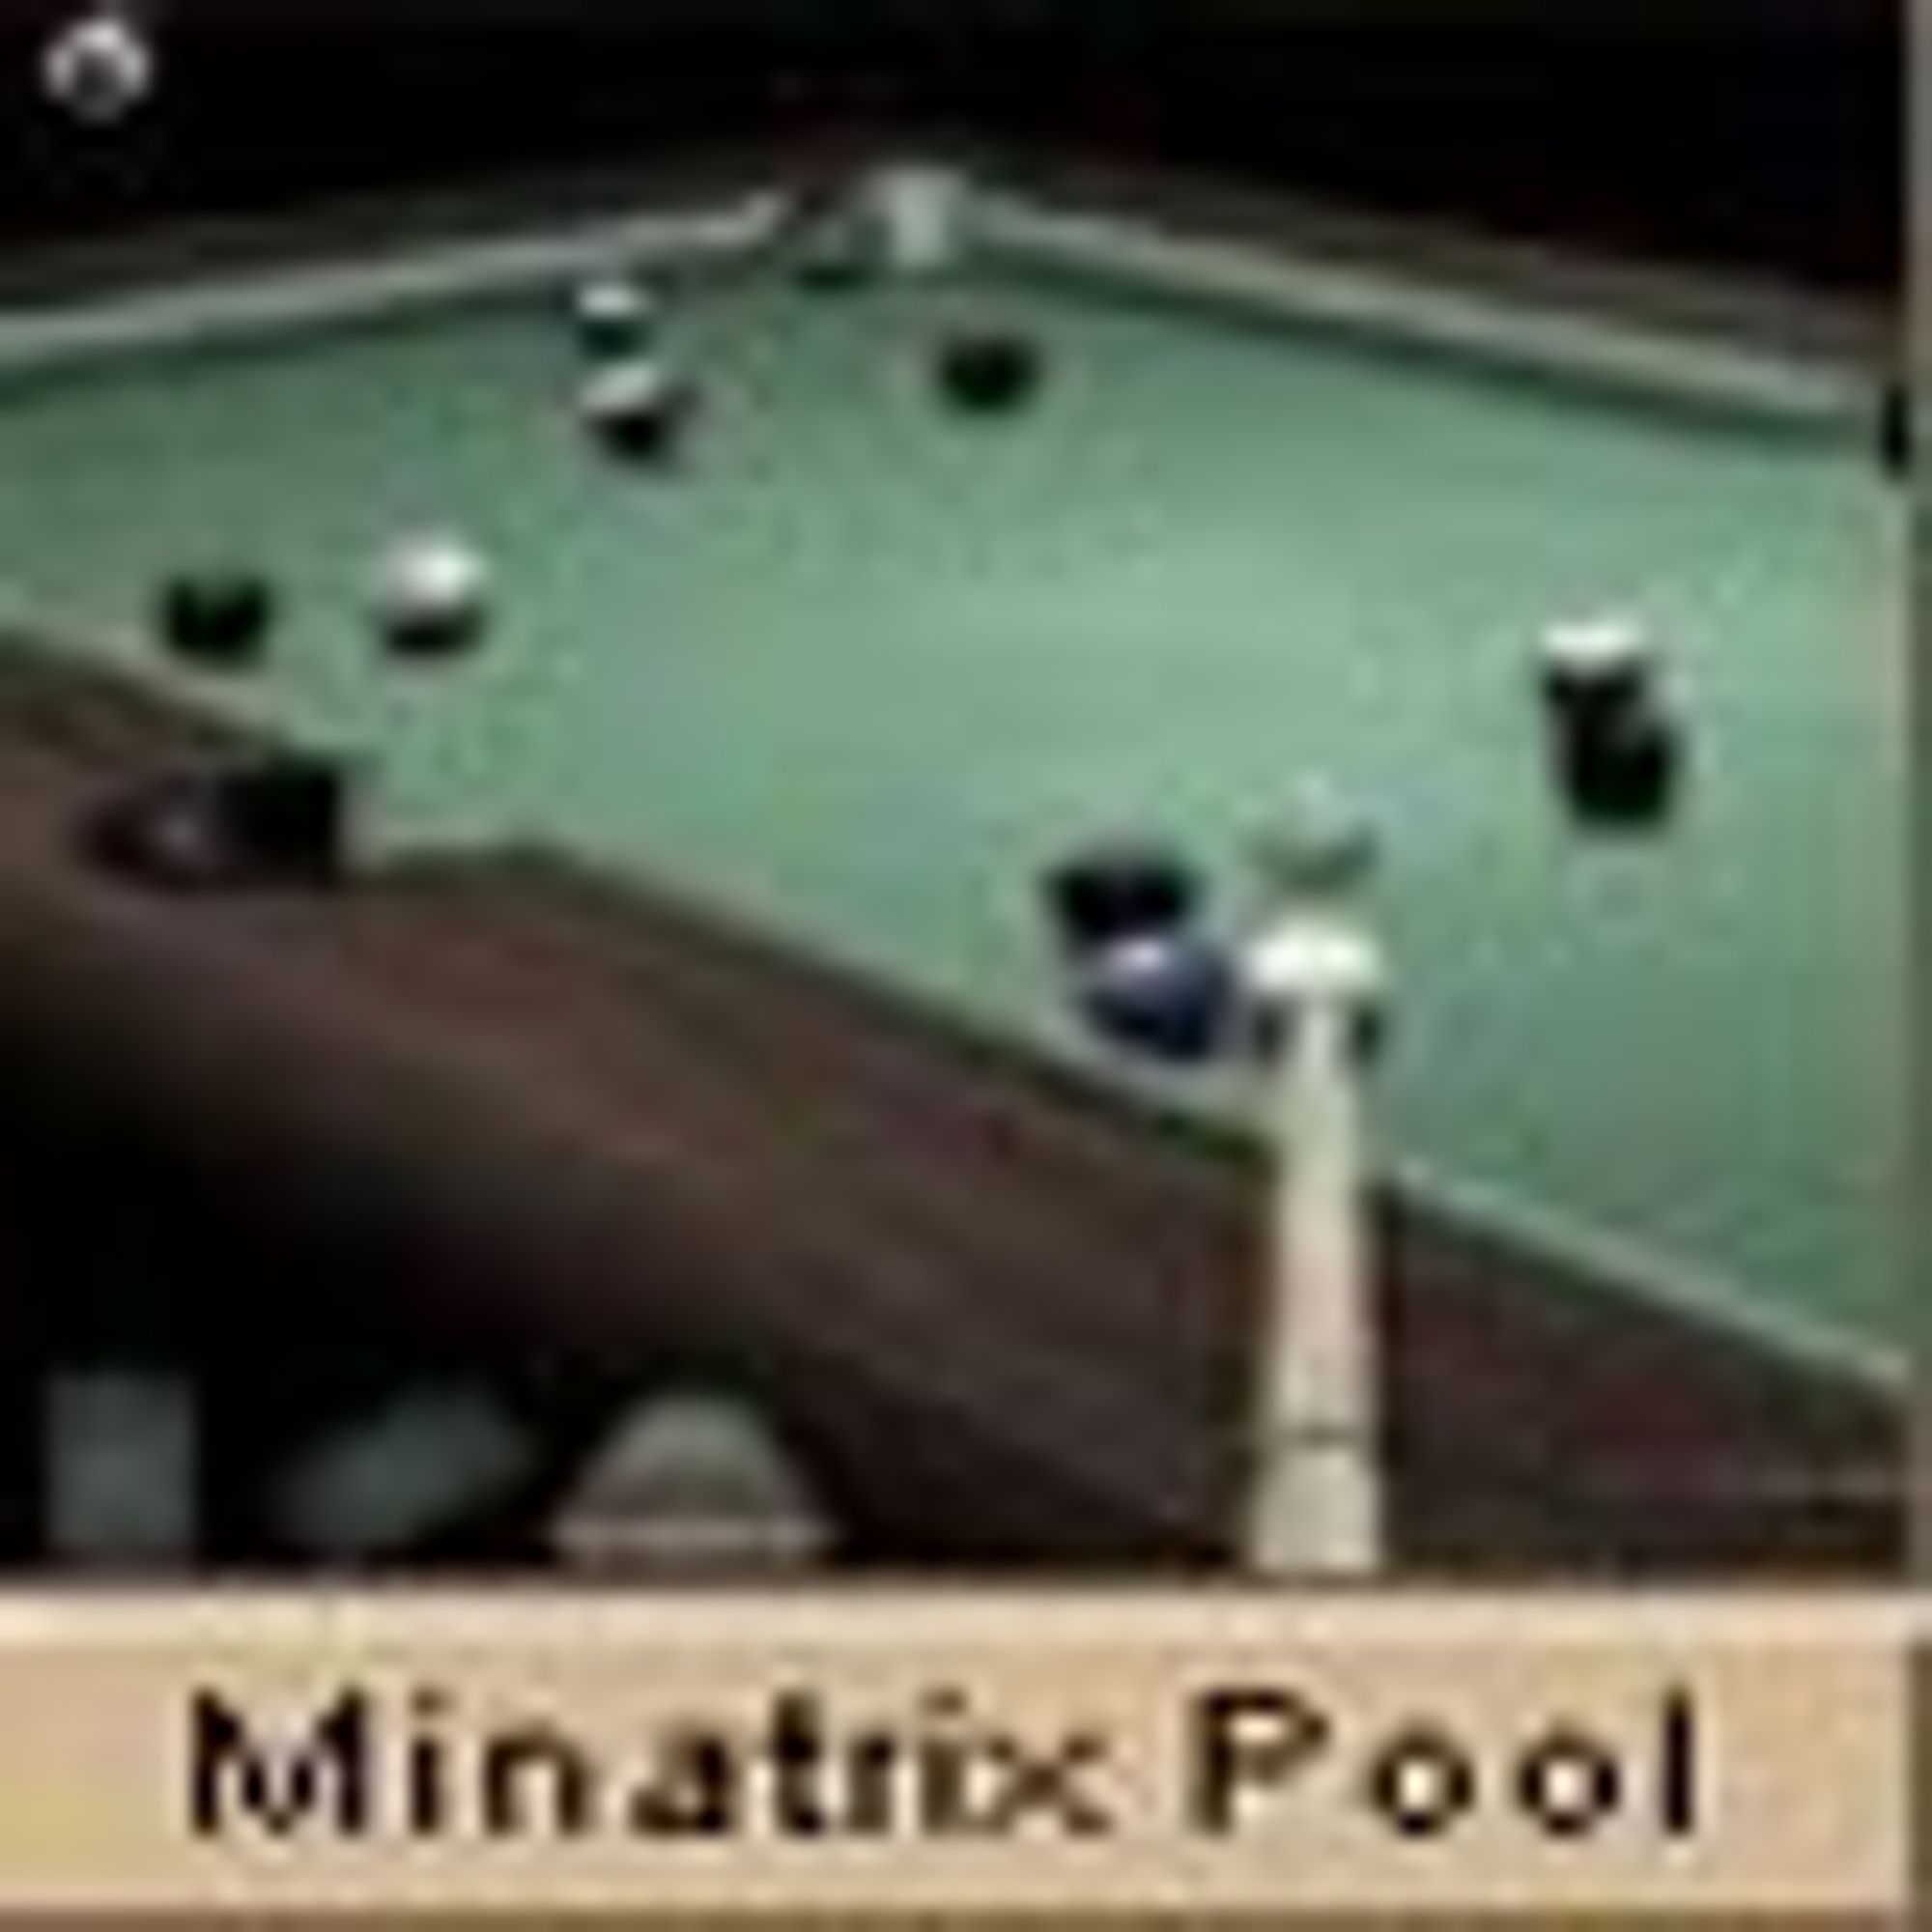 Vignett for Miniatrix Pools.